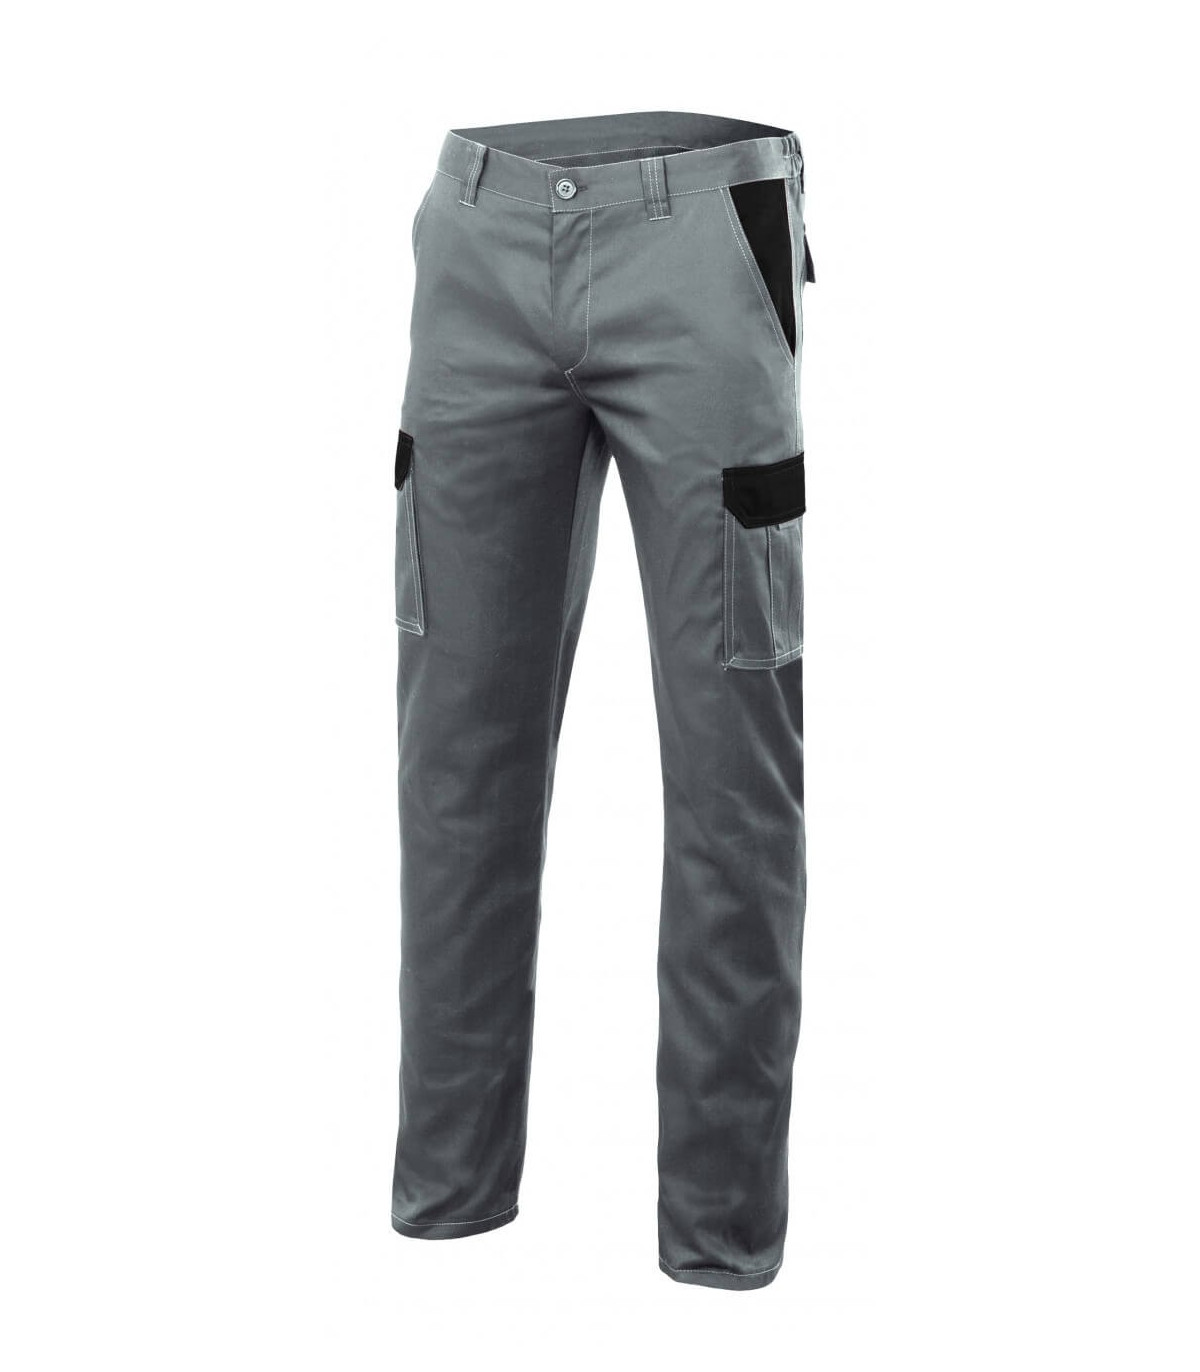 Pantalon industrial gris stretch multibolsillos combinado VELILLA Serie  PT103002S, comprar online